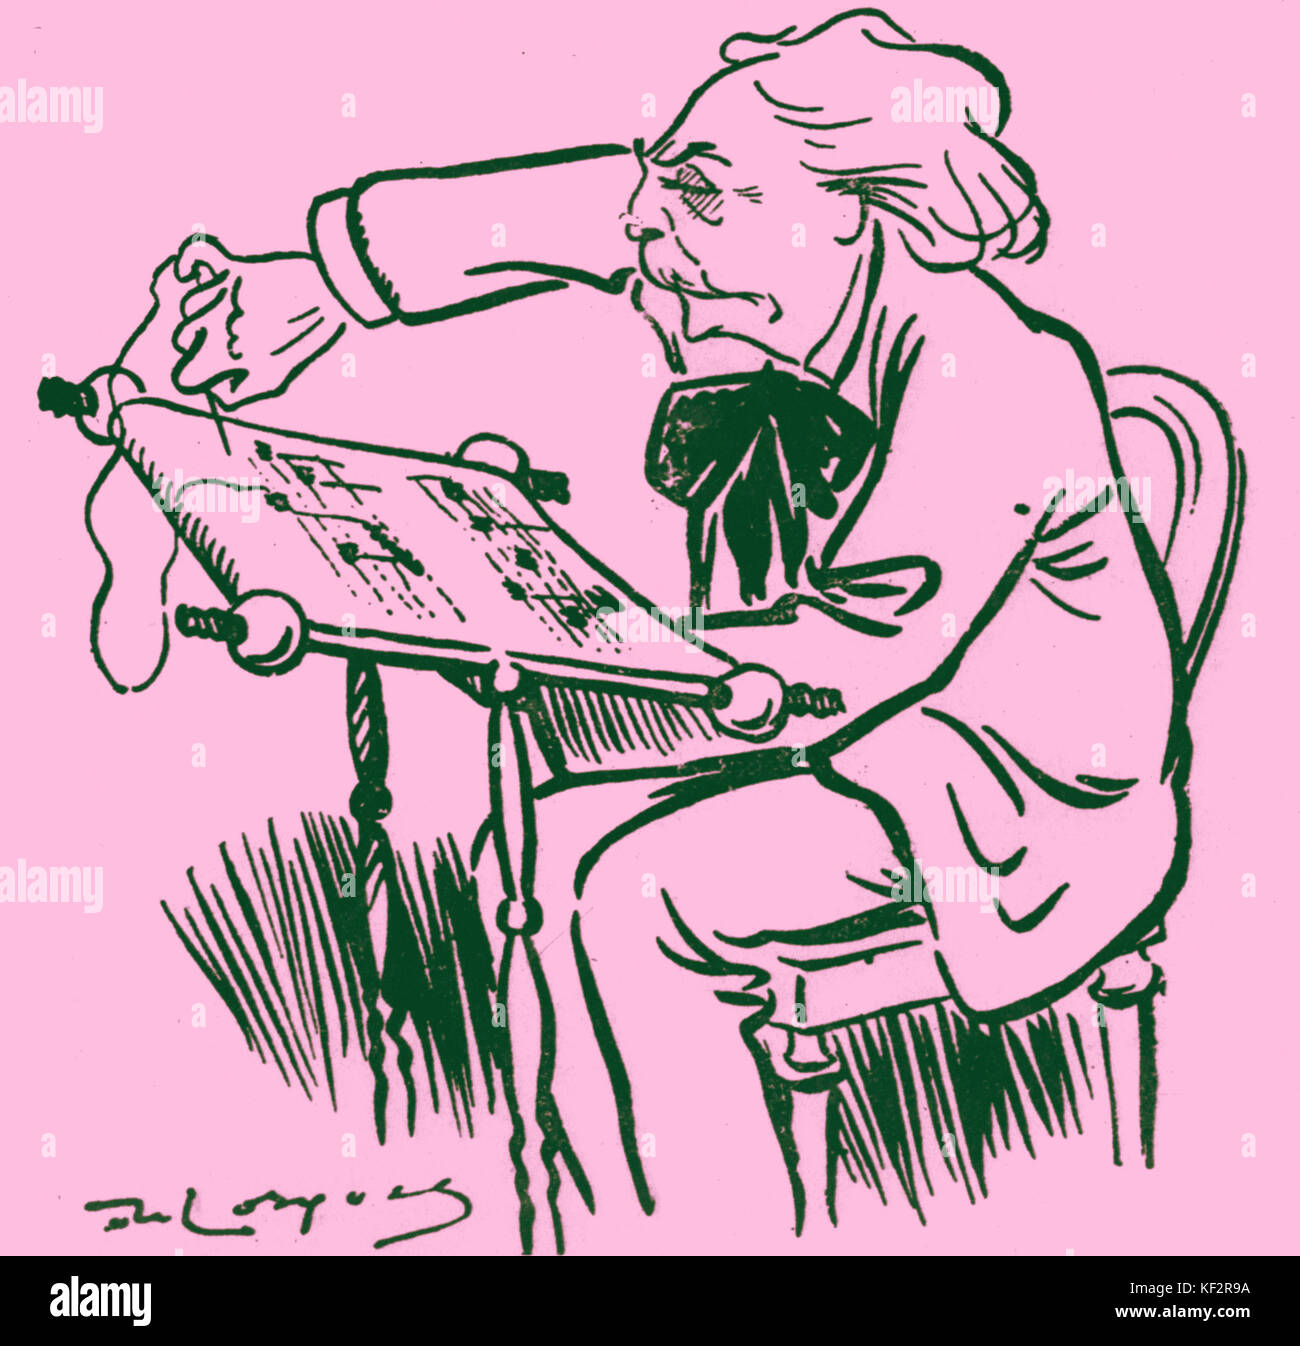 Karikatur von FAURÉ von "Le Rire, 1913. Von Daniel de Loscques gezeichnet. Bildunterschrift lautet: "Gabriel Fauré tisse sa Partition de Pénélope". "Gabriel Fauré spinnt seine Kerbe von Abraham' Stockfoto